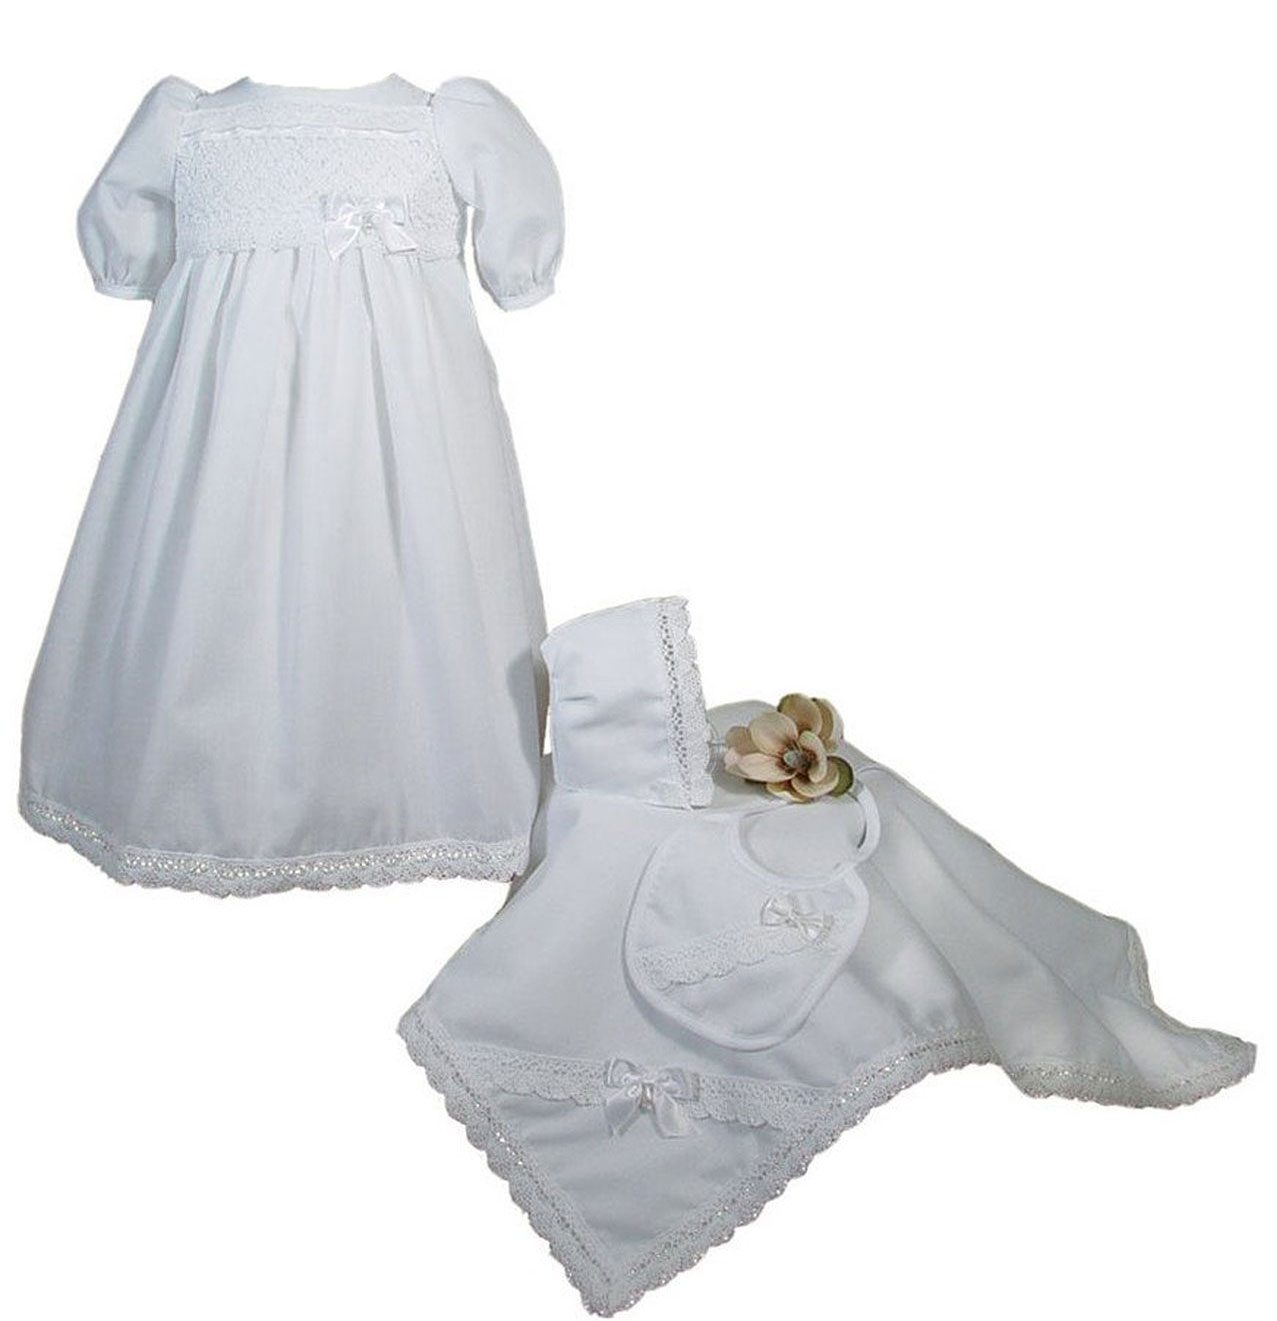 Preemie Baptism Dress